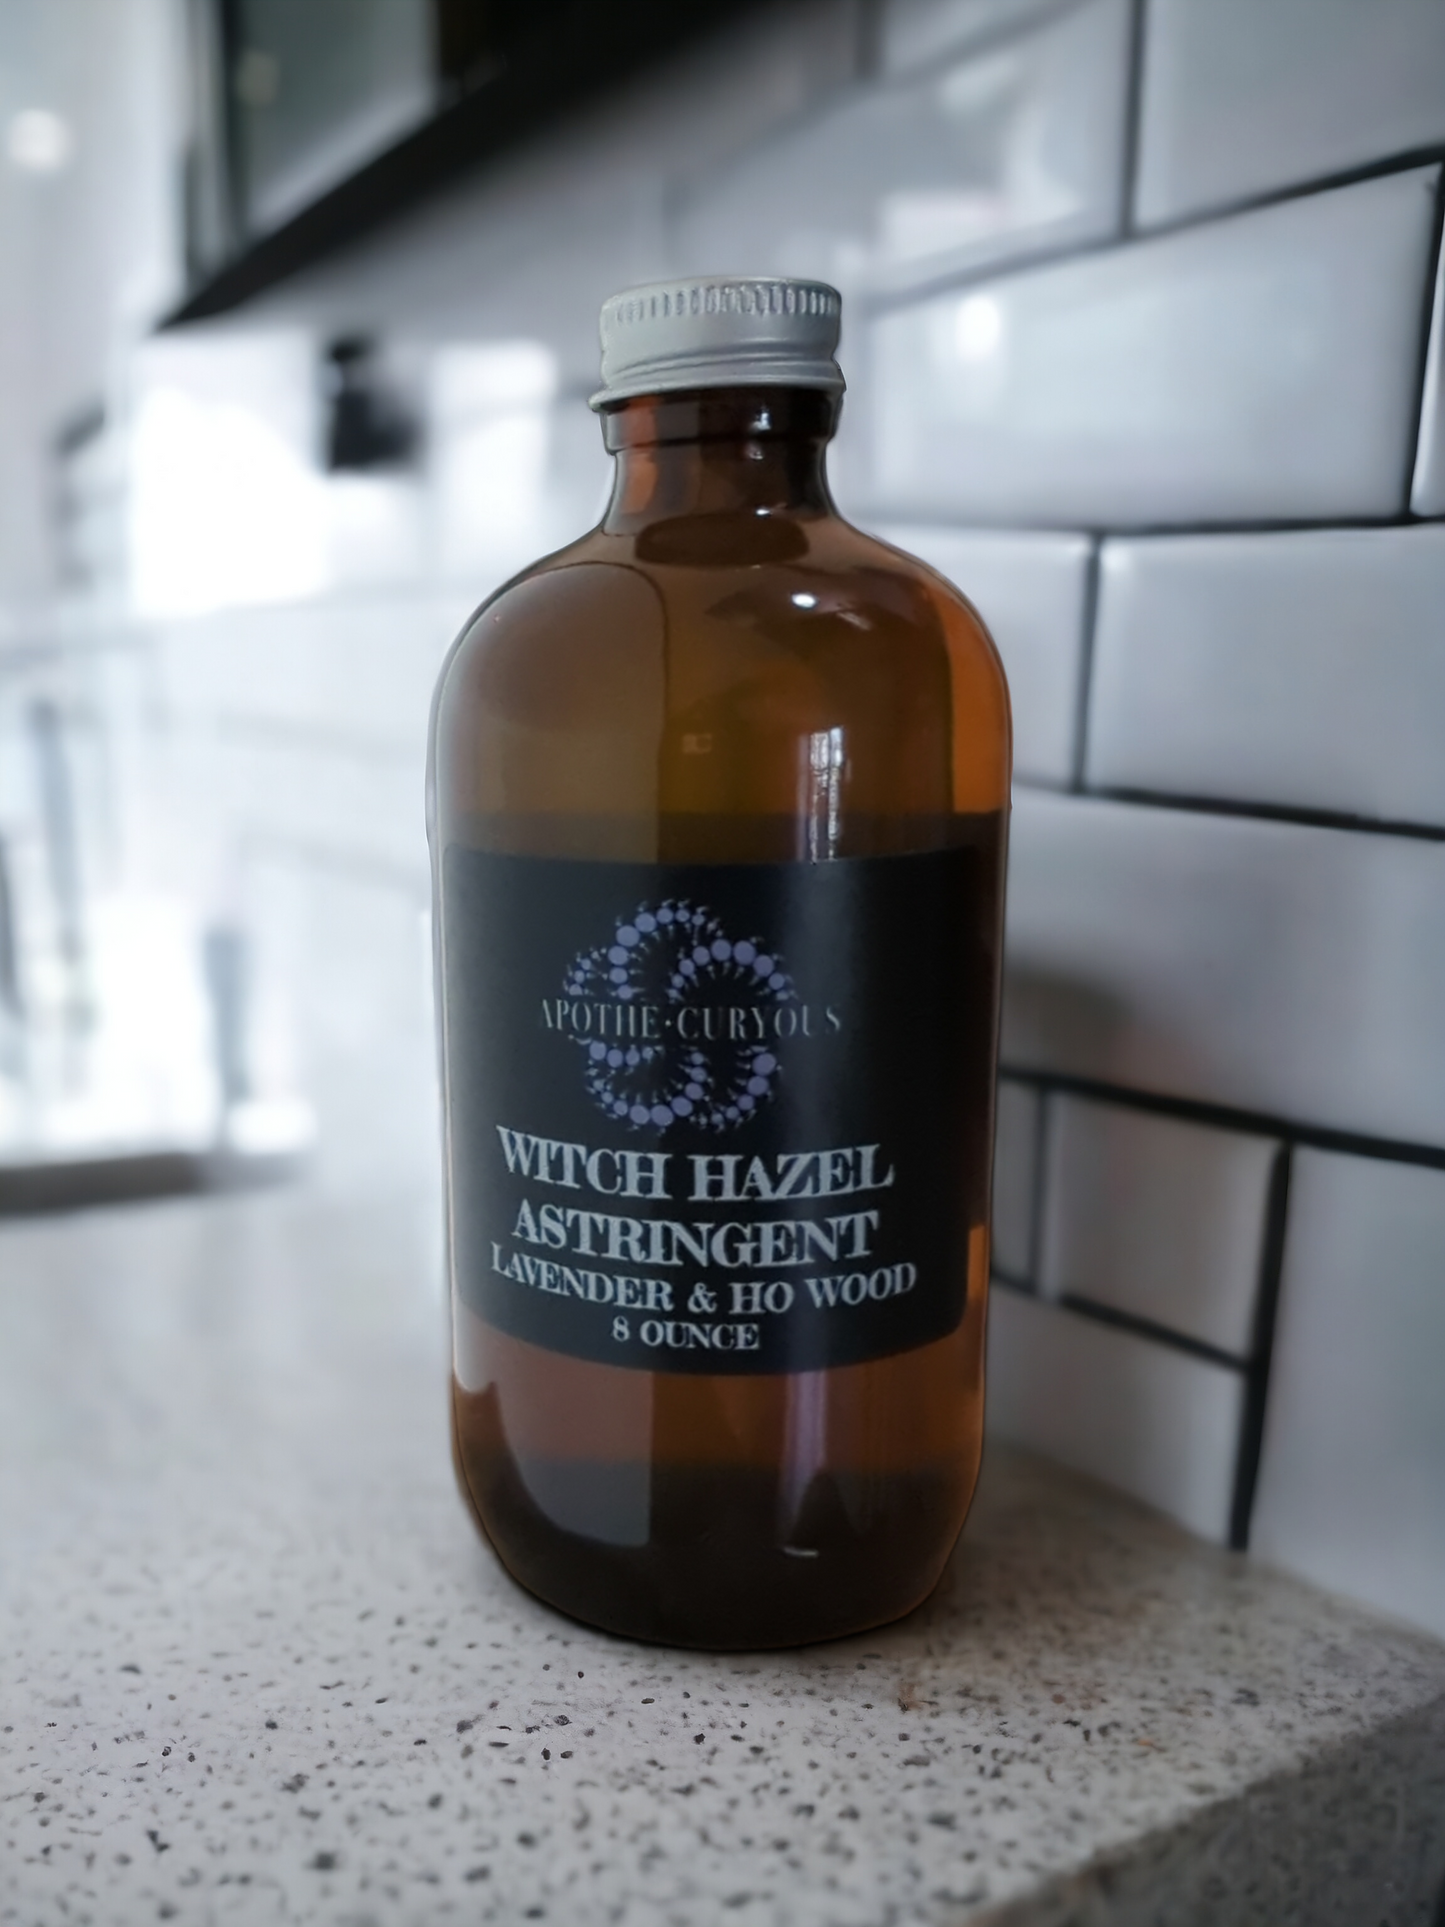 Witch Hazel astringent in amber glass bottle, Lavender  & Ho Wood scent, Apothecuryous